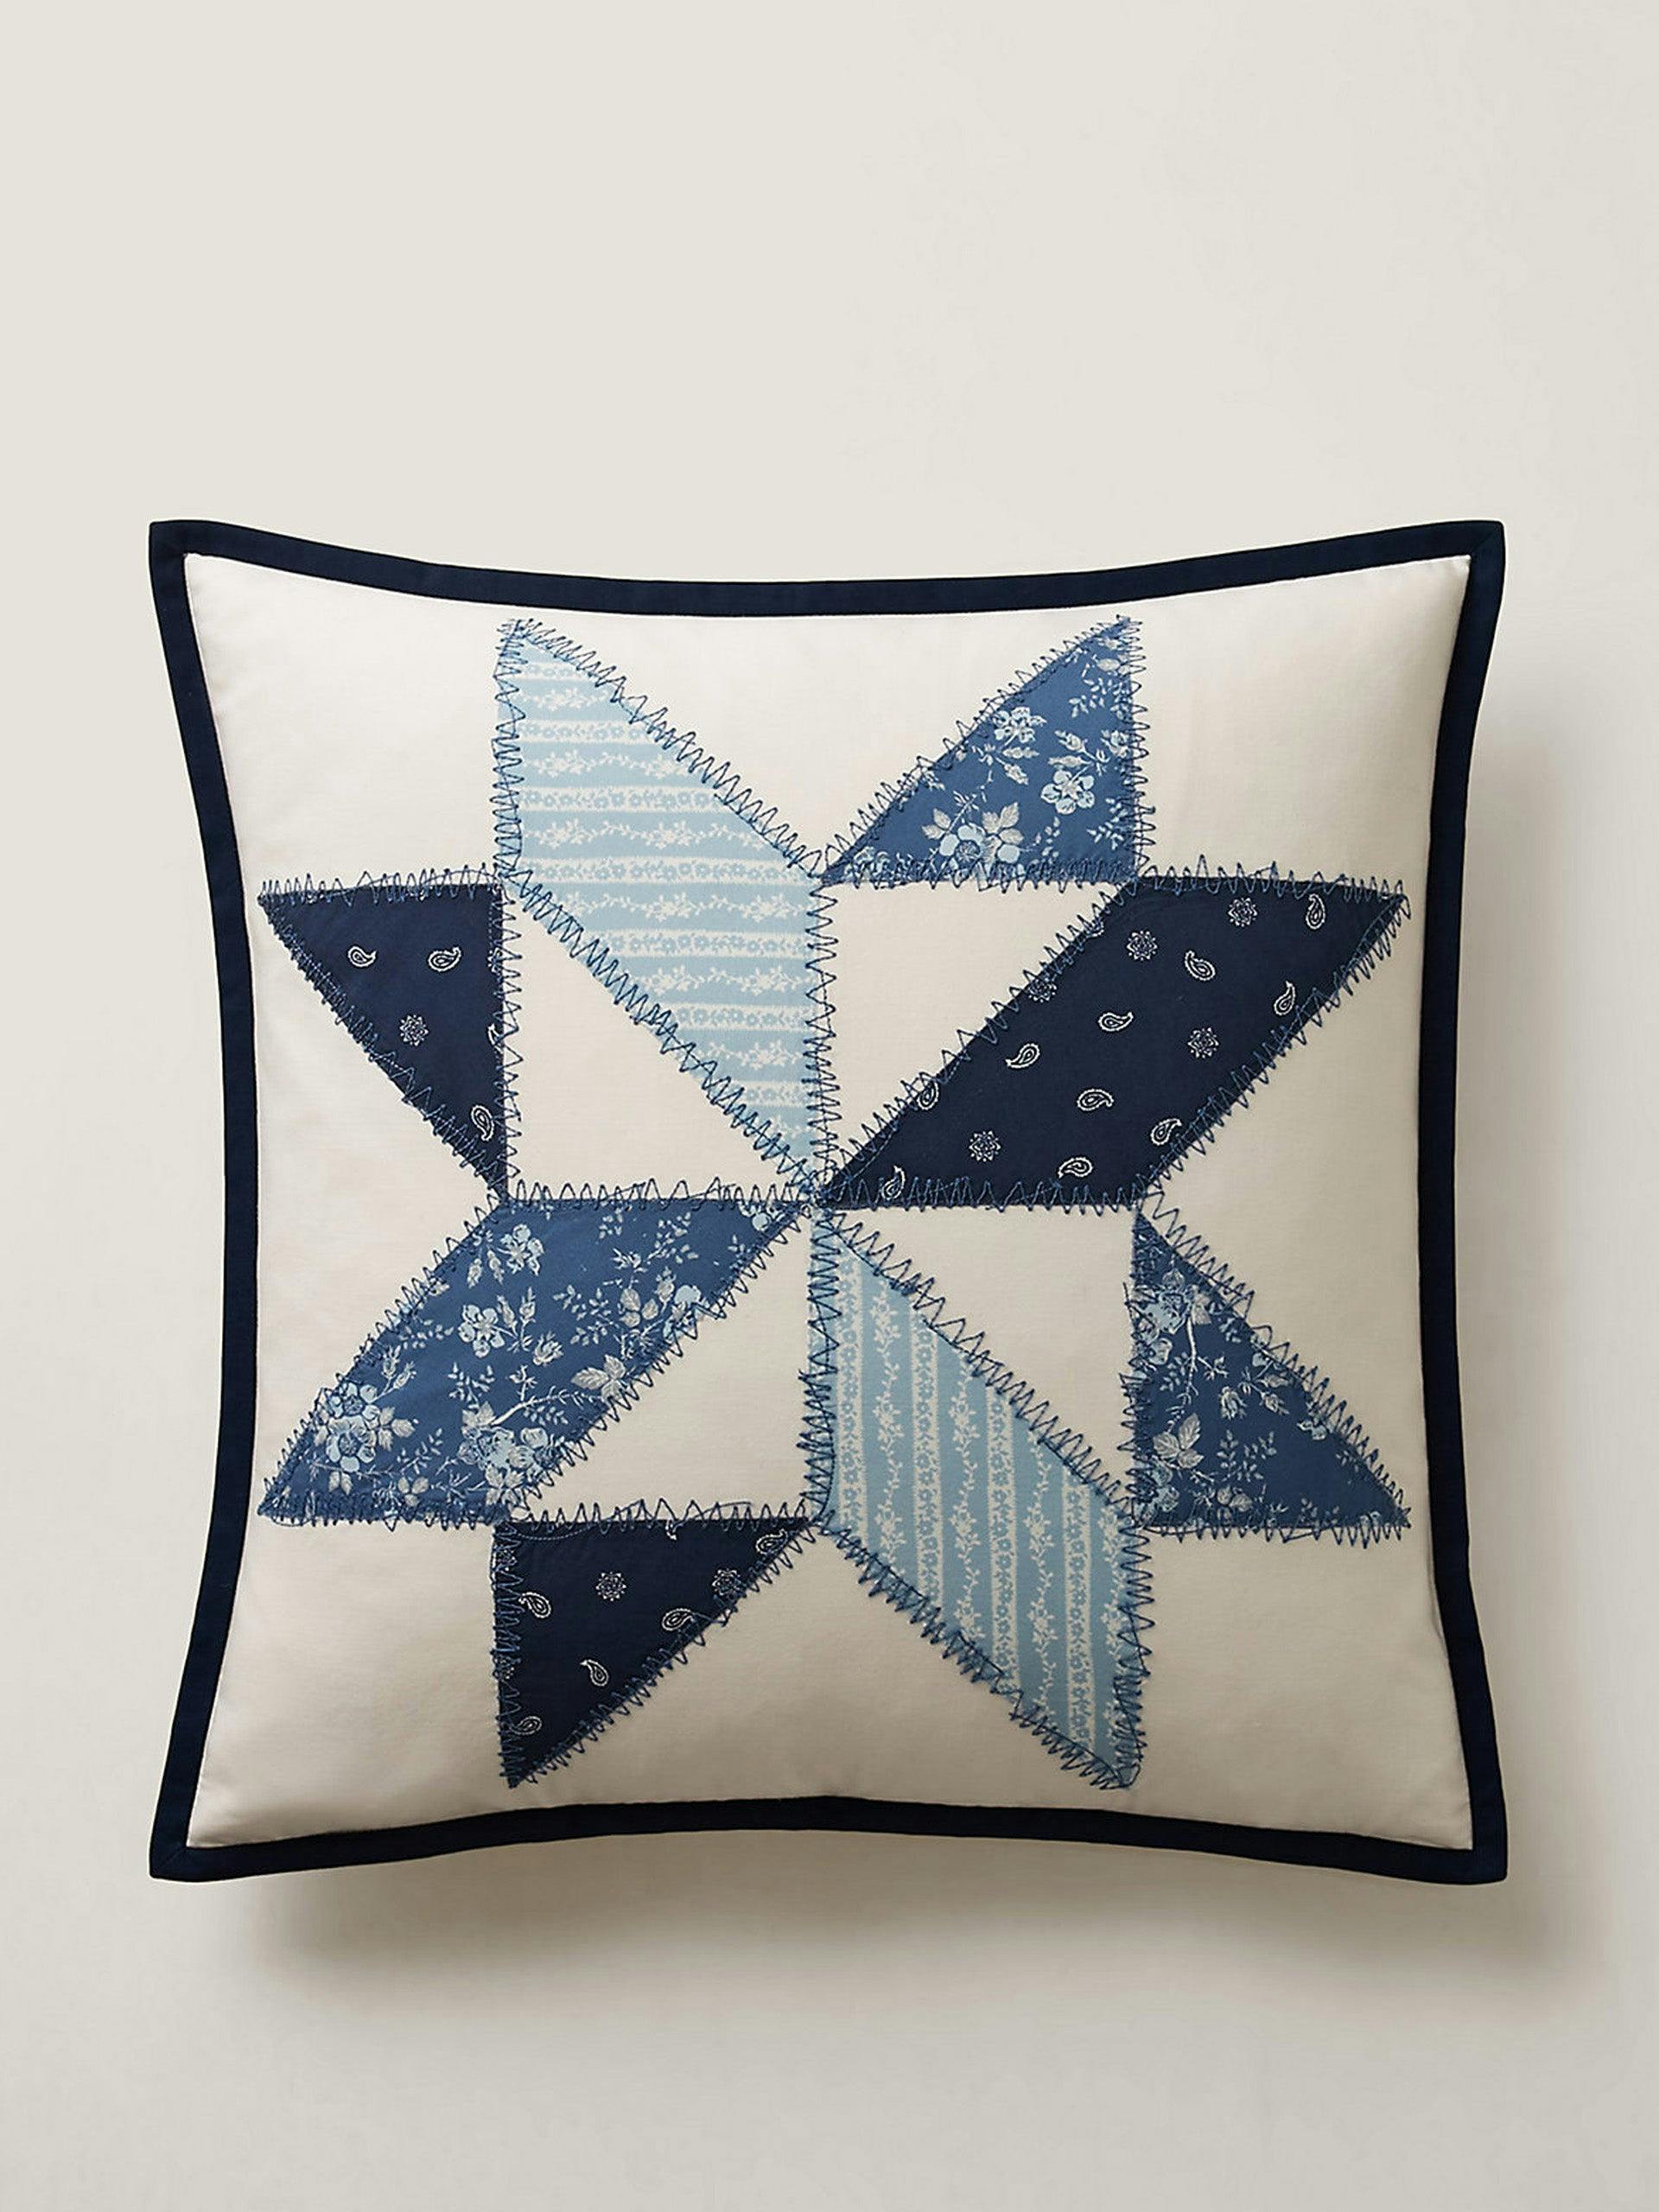 Blue and white throw pillow